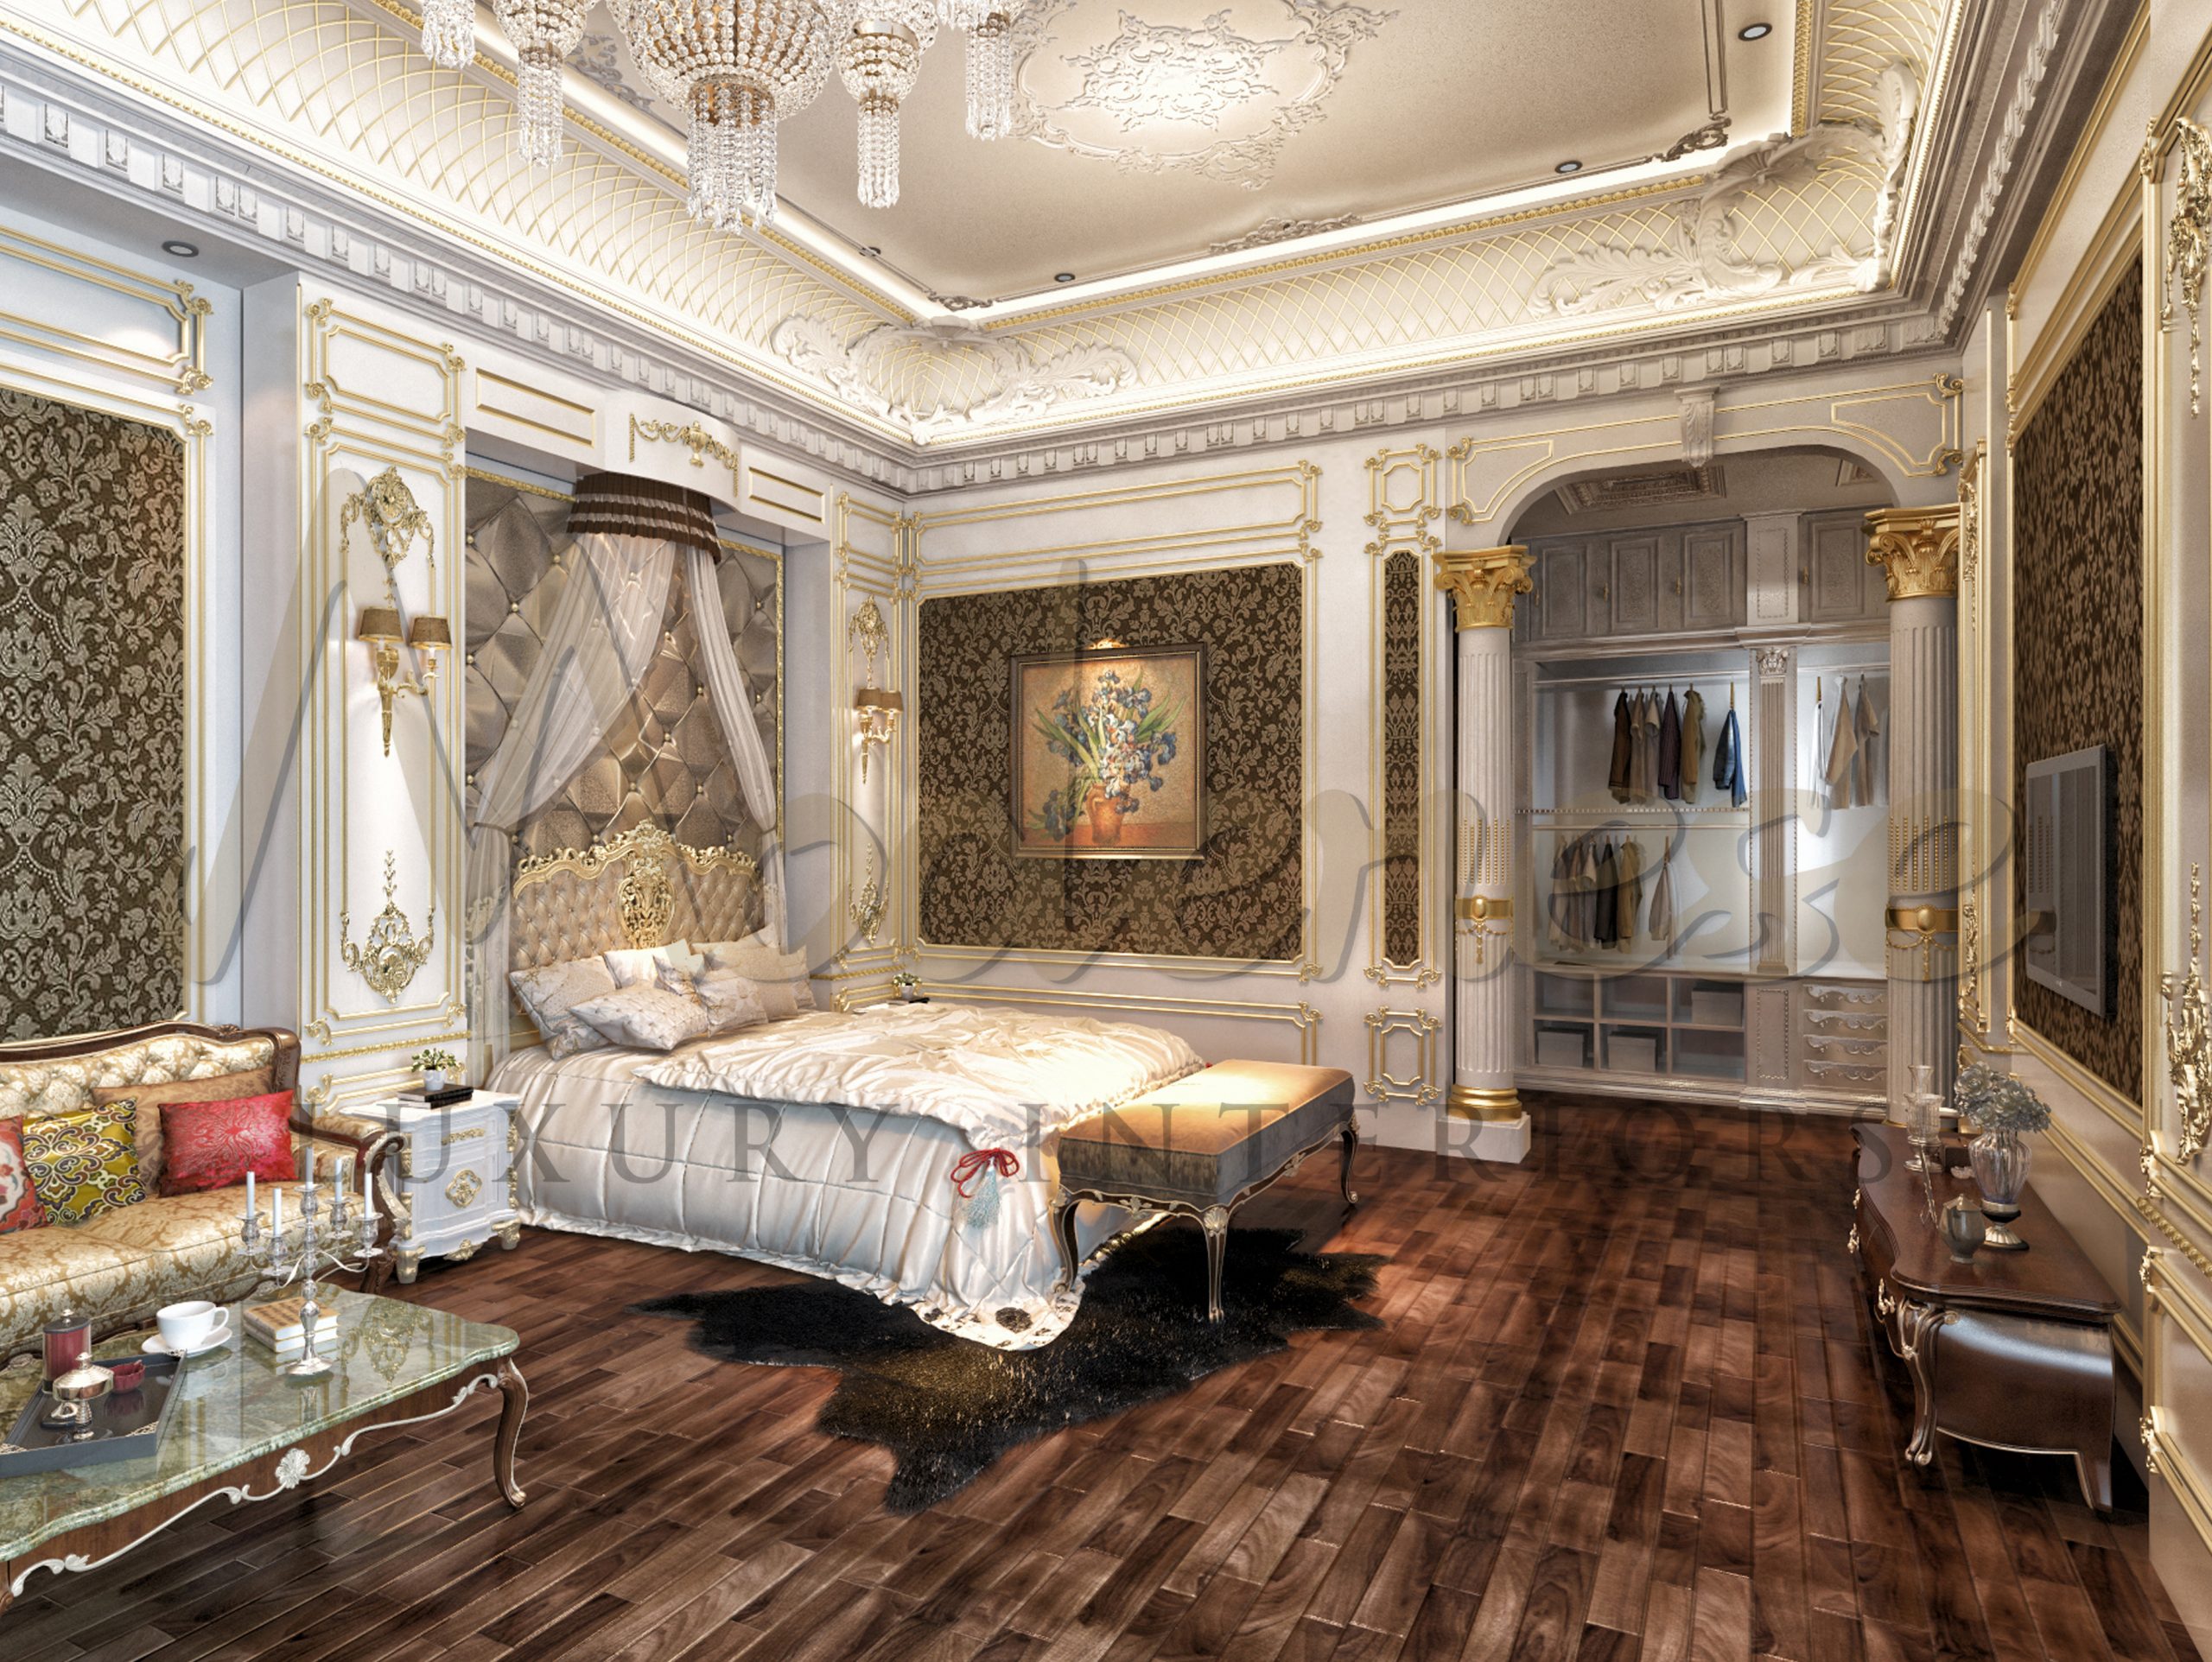 Glamorous Baroque Dream Bedroom Design Ideas